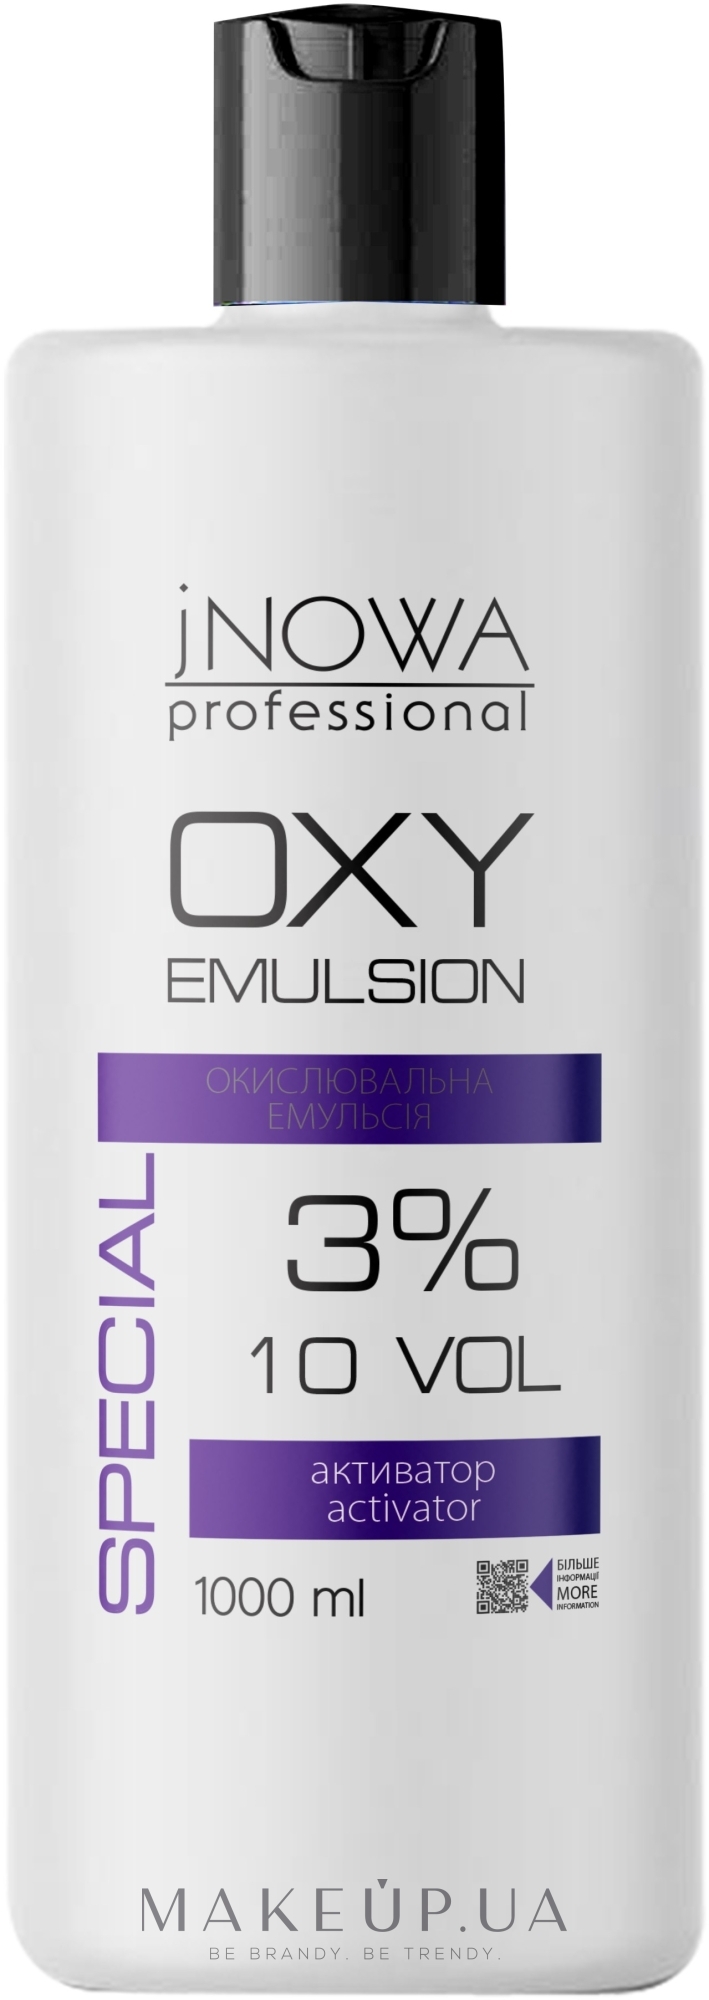 Окислительная эмульсия, 3 % - jNOWA Professional OXY 3 % (10 vol) — фото 1000ml